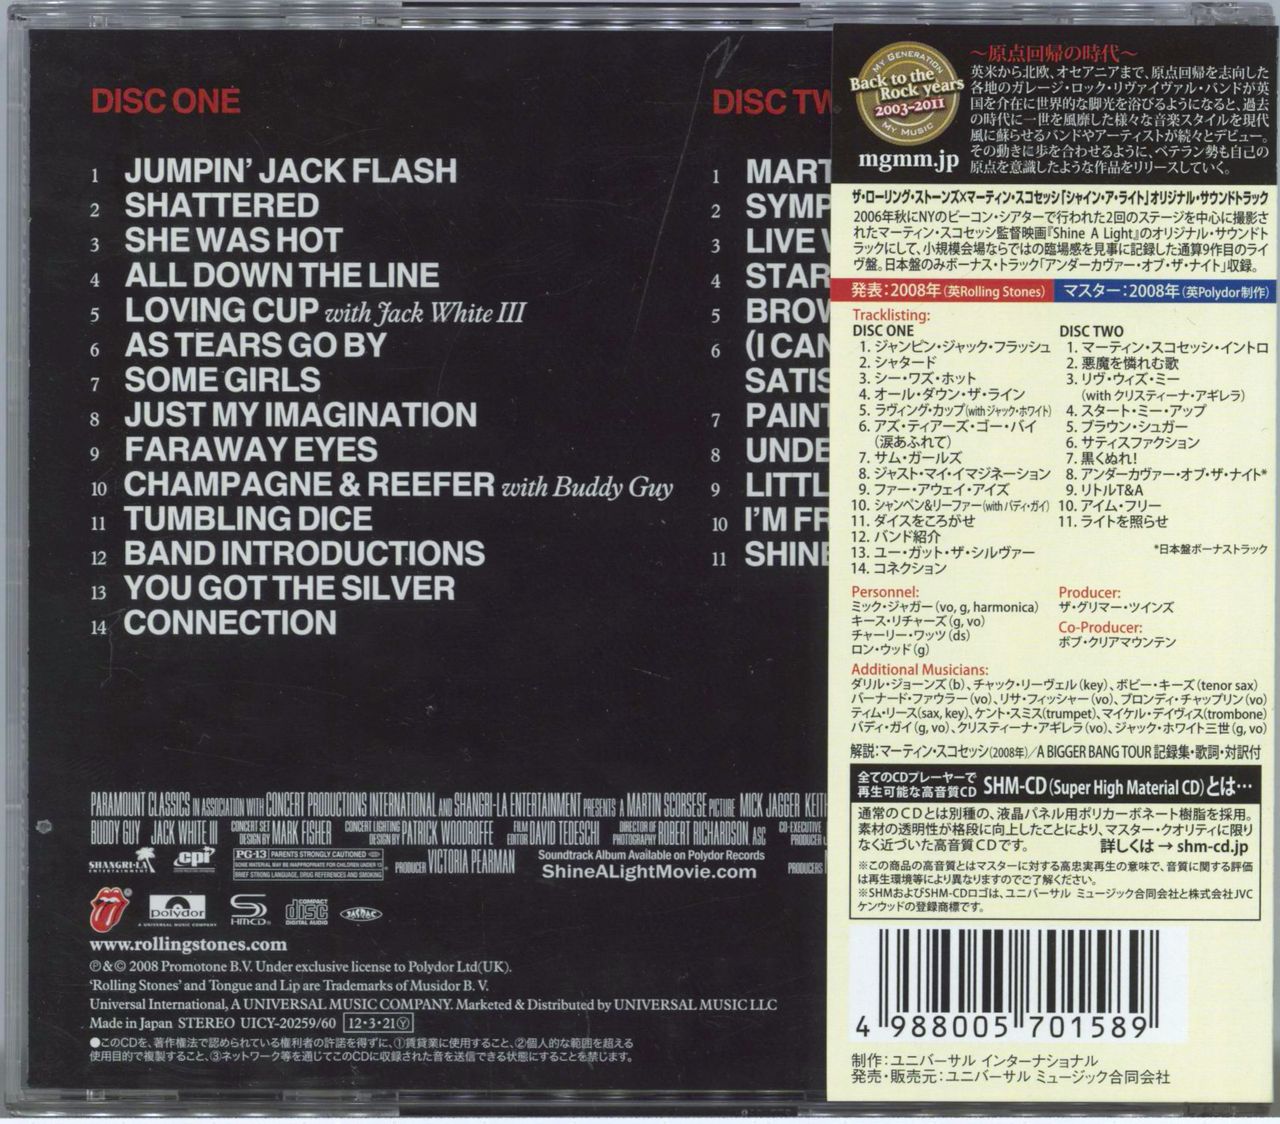 Jet Sovereign Høre fra The Rolling Stones Shine A Light - SHM-CD Japanese SHM CD — RareVinyl.com